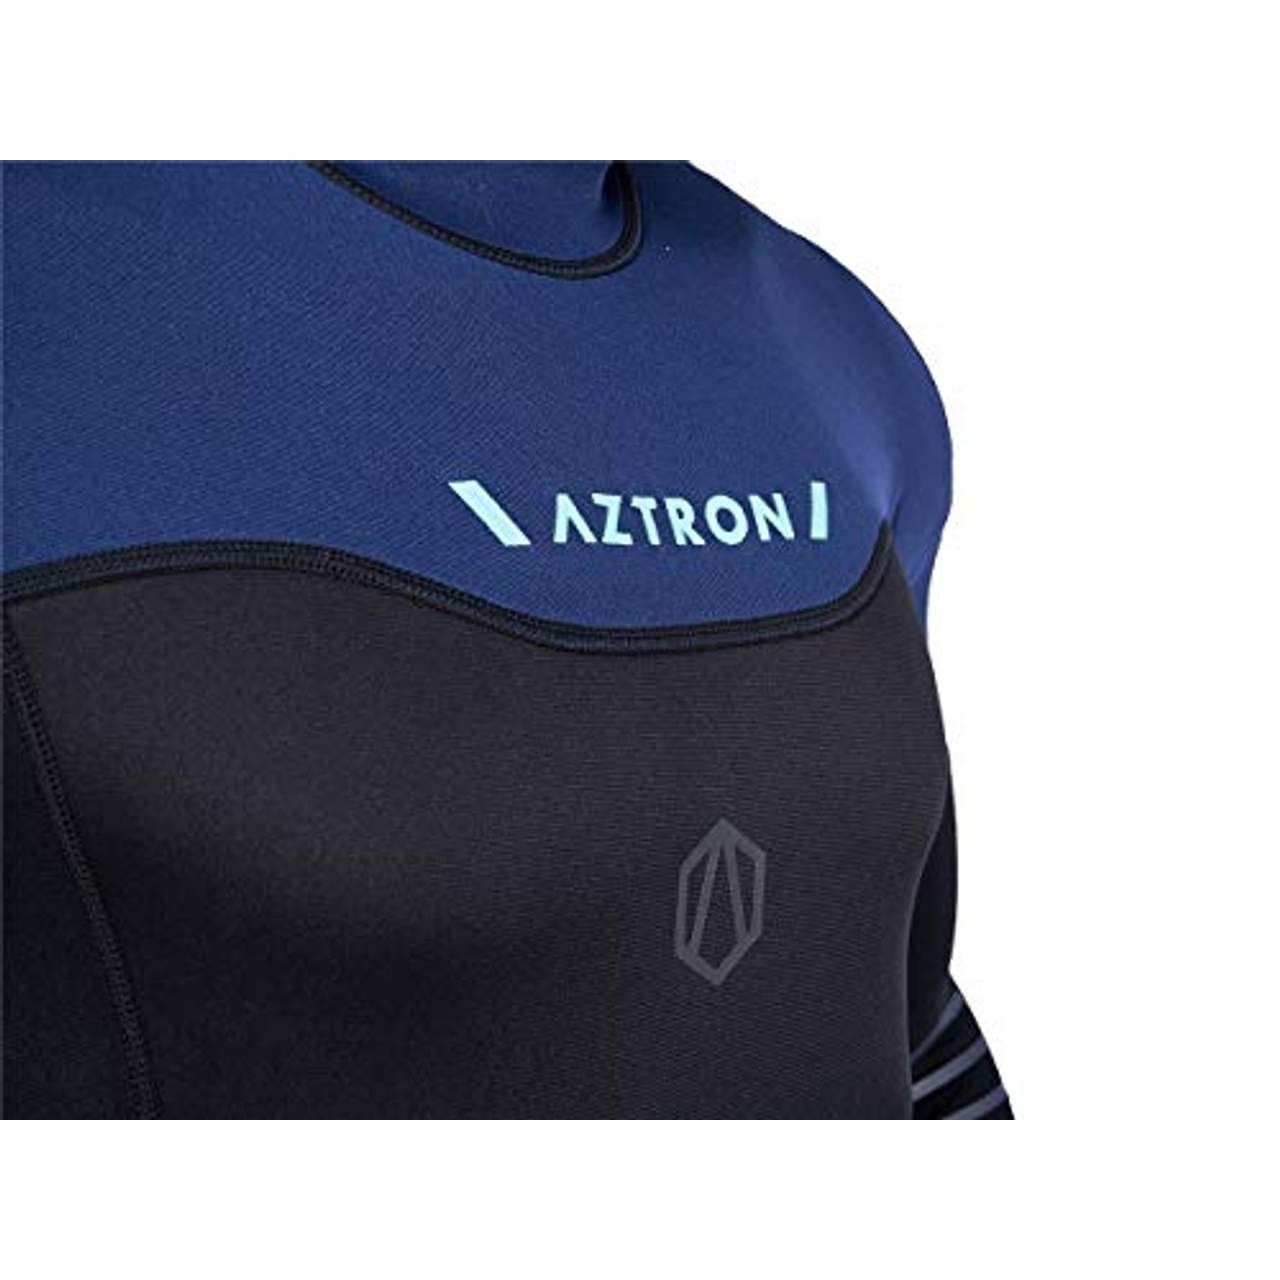 Aztron Habble Neopren Shorty Surfshorty Surfanzug Ultraflex